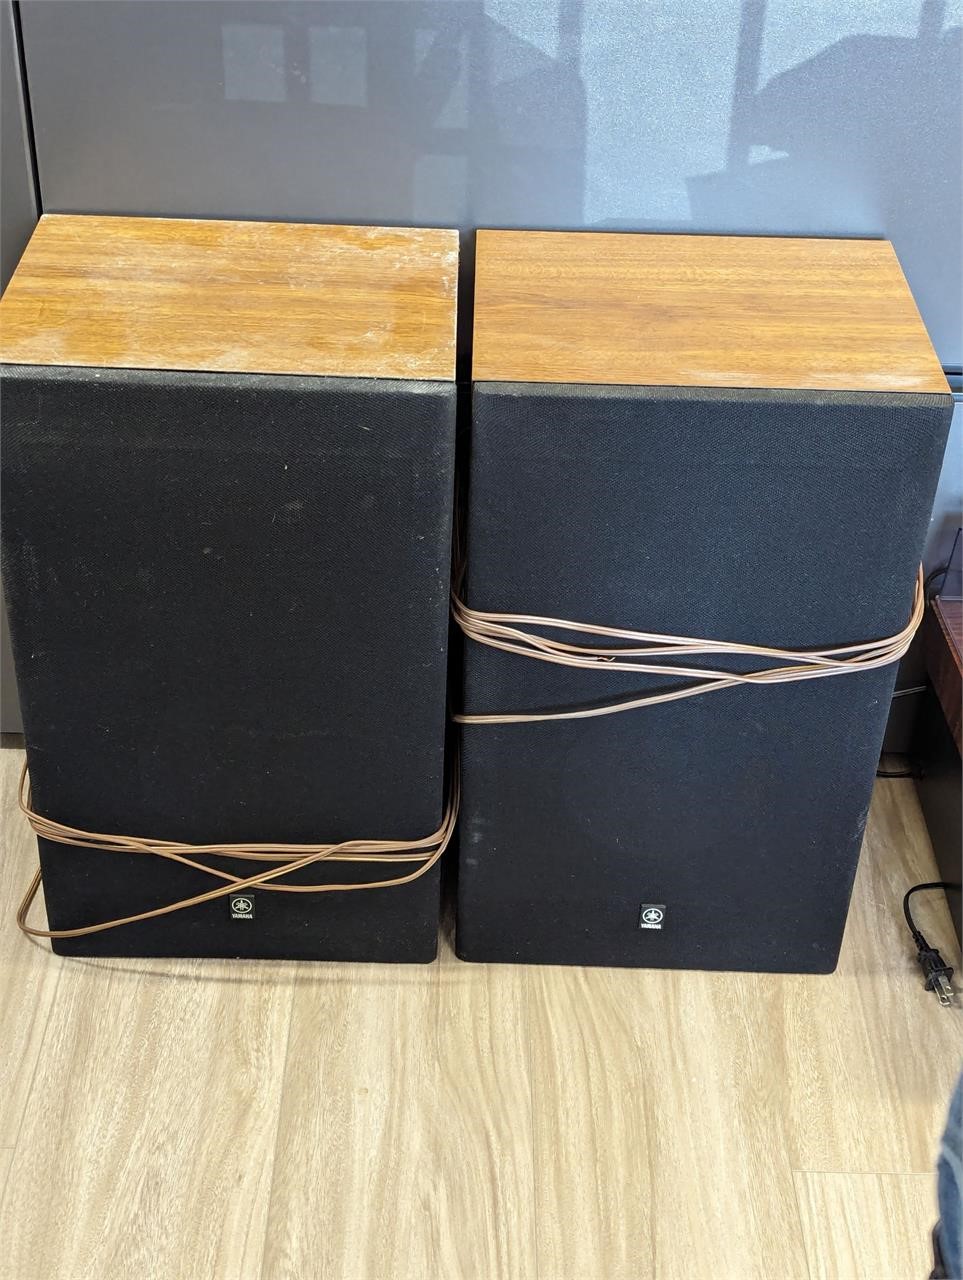 Yamaha Set of Stereo Speakers